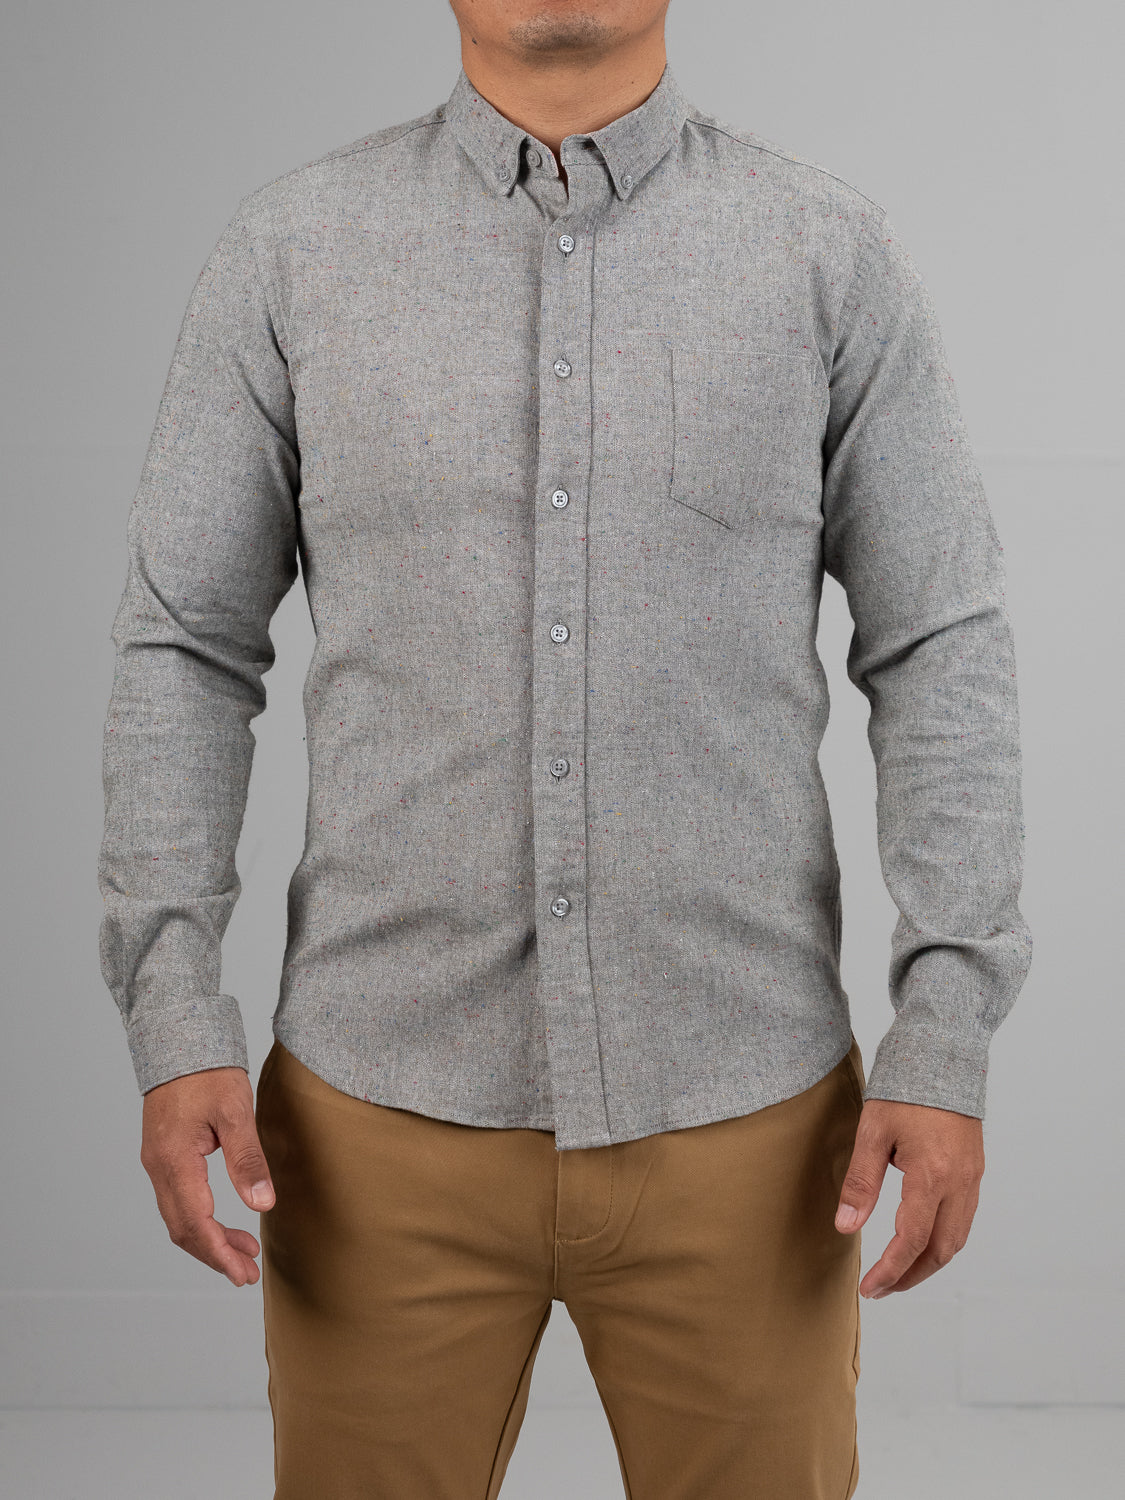 Allswell Speckled Linen Cotton Shirt